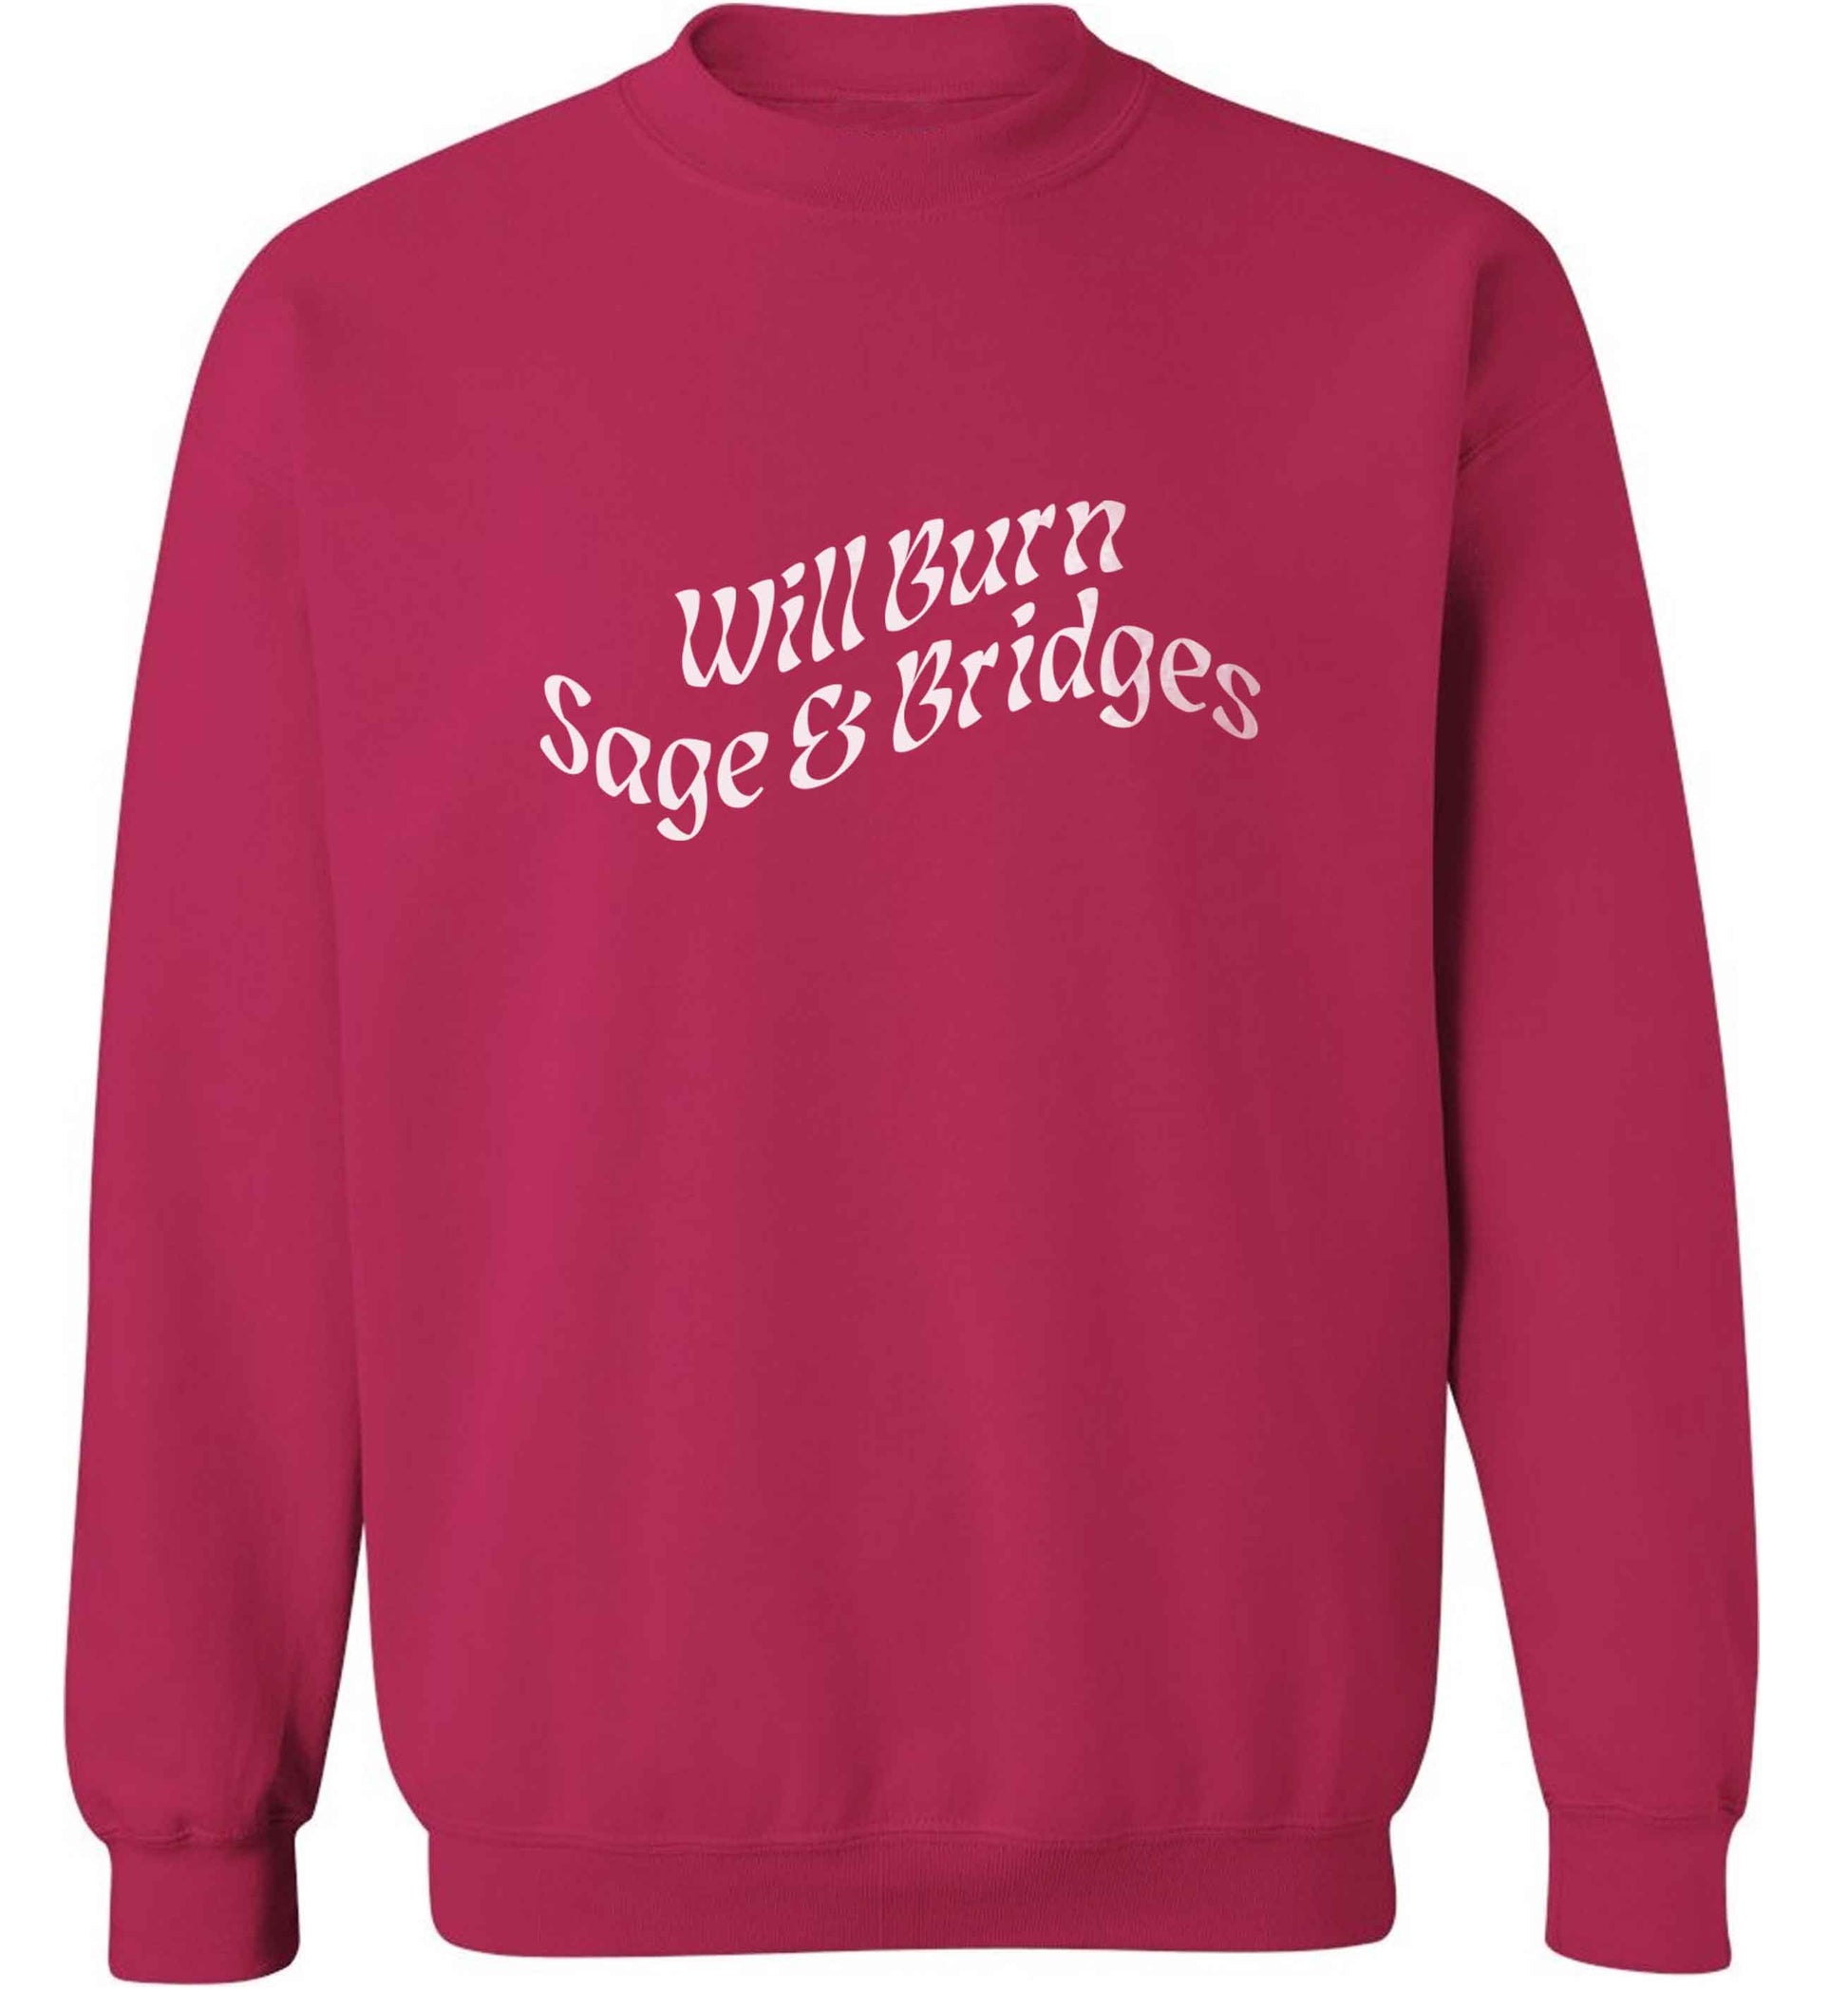 Will burn bridges and sage adult's unisex pink sweater 2XL